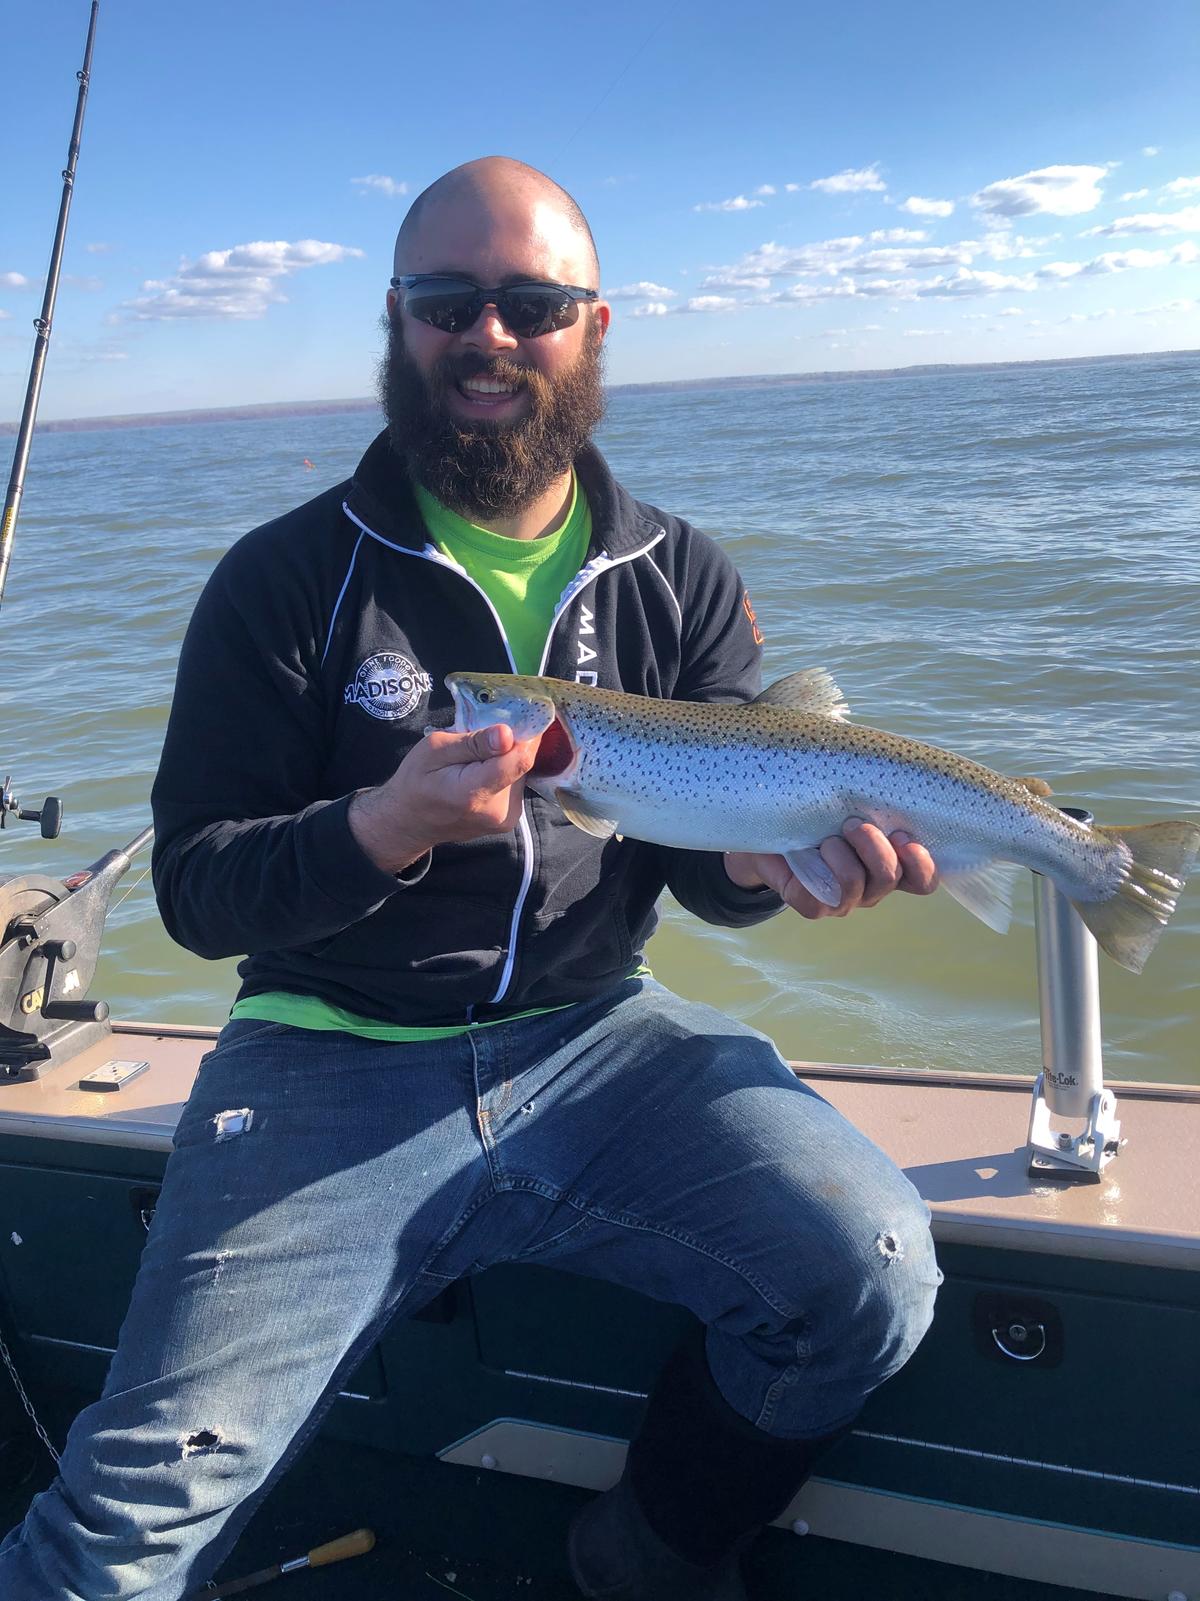 Ryan Lepak on a boat holding a fish.